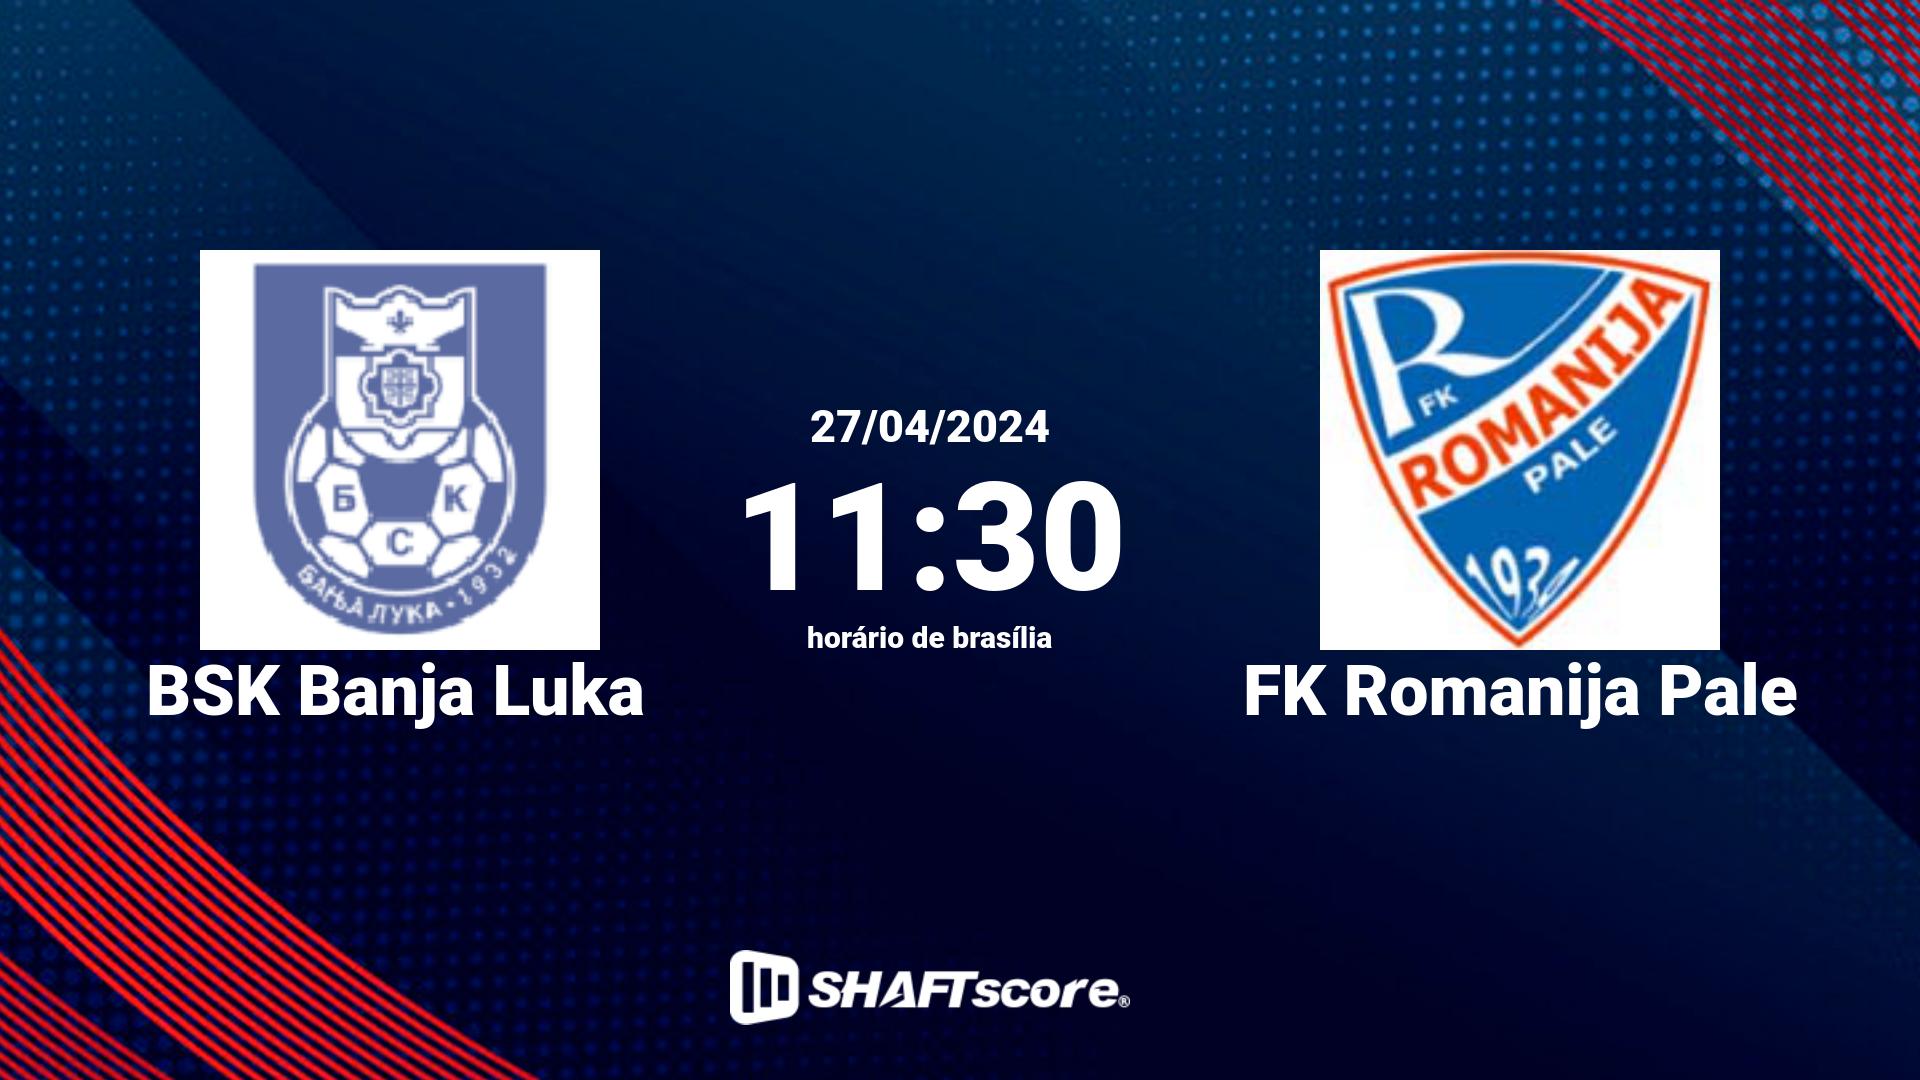 Estatísticas do jogo BSK Banja Luka vs FK Romanija Pale 27.04 11:30